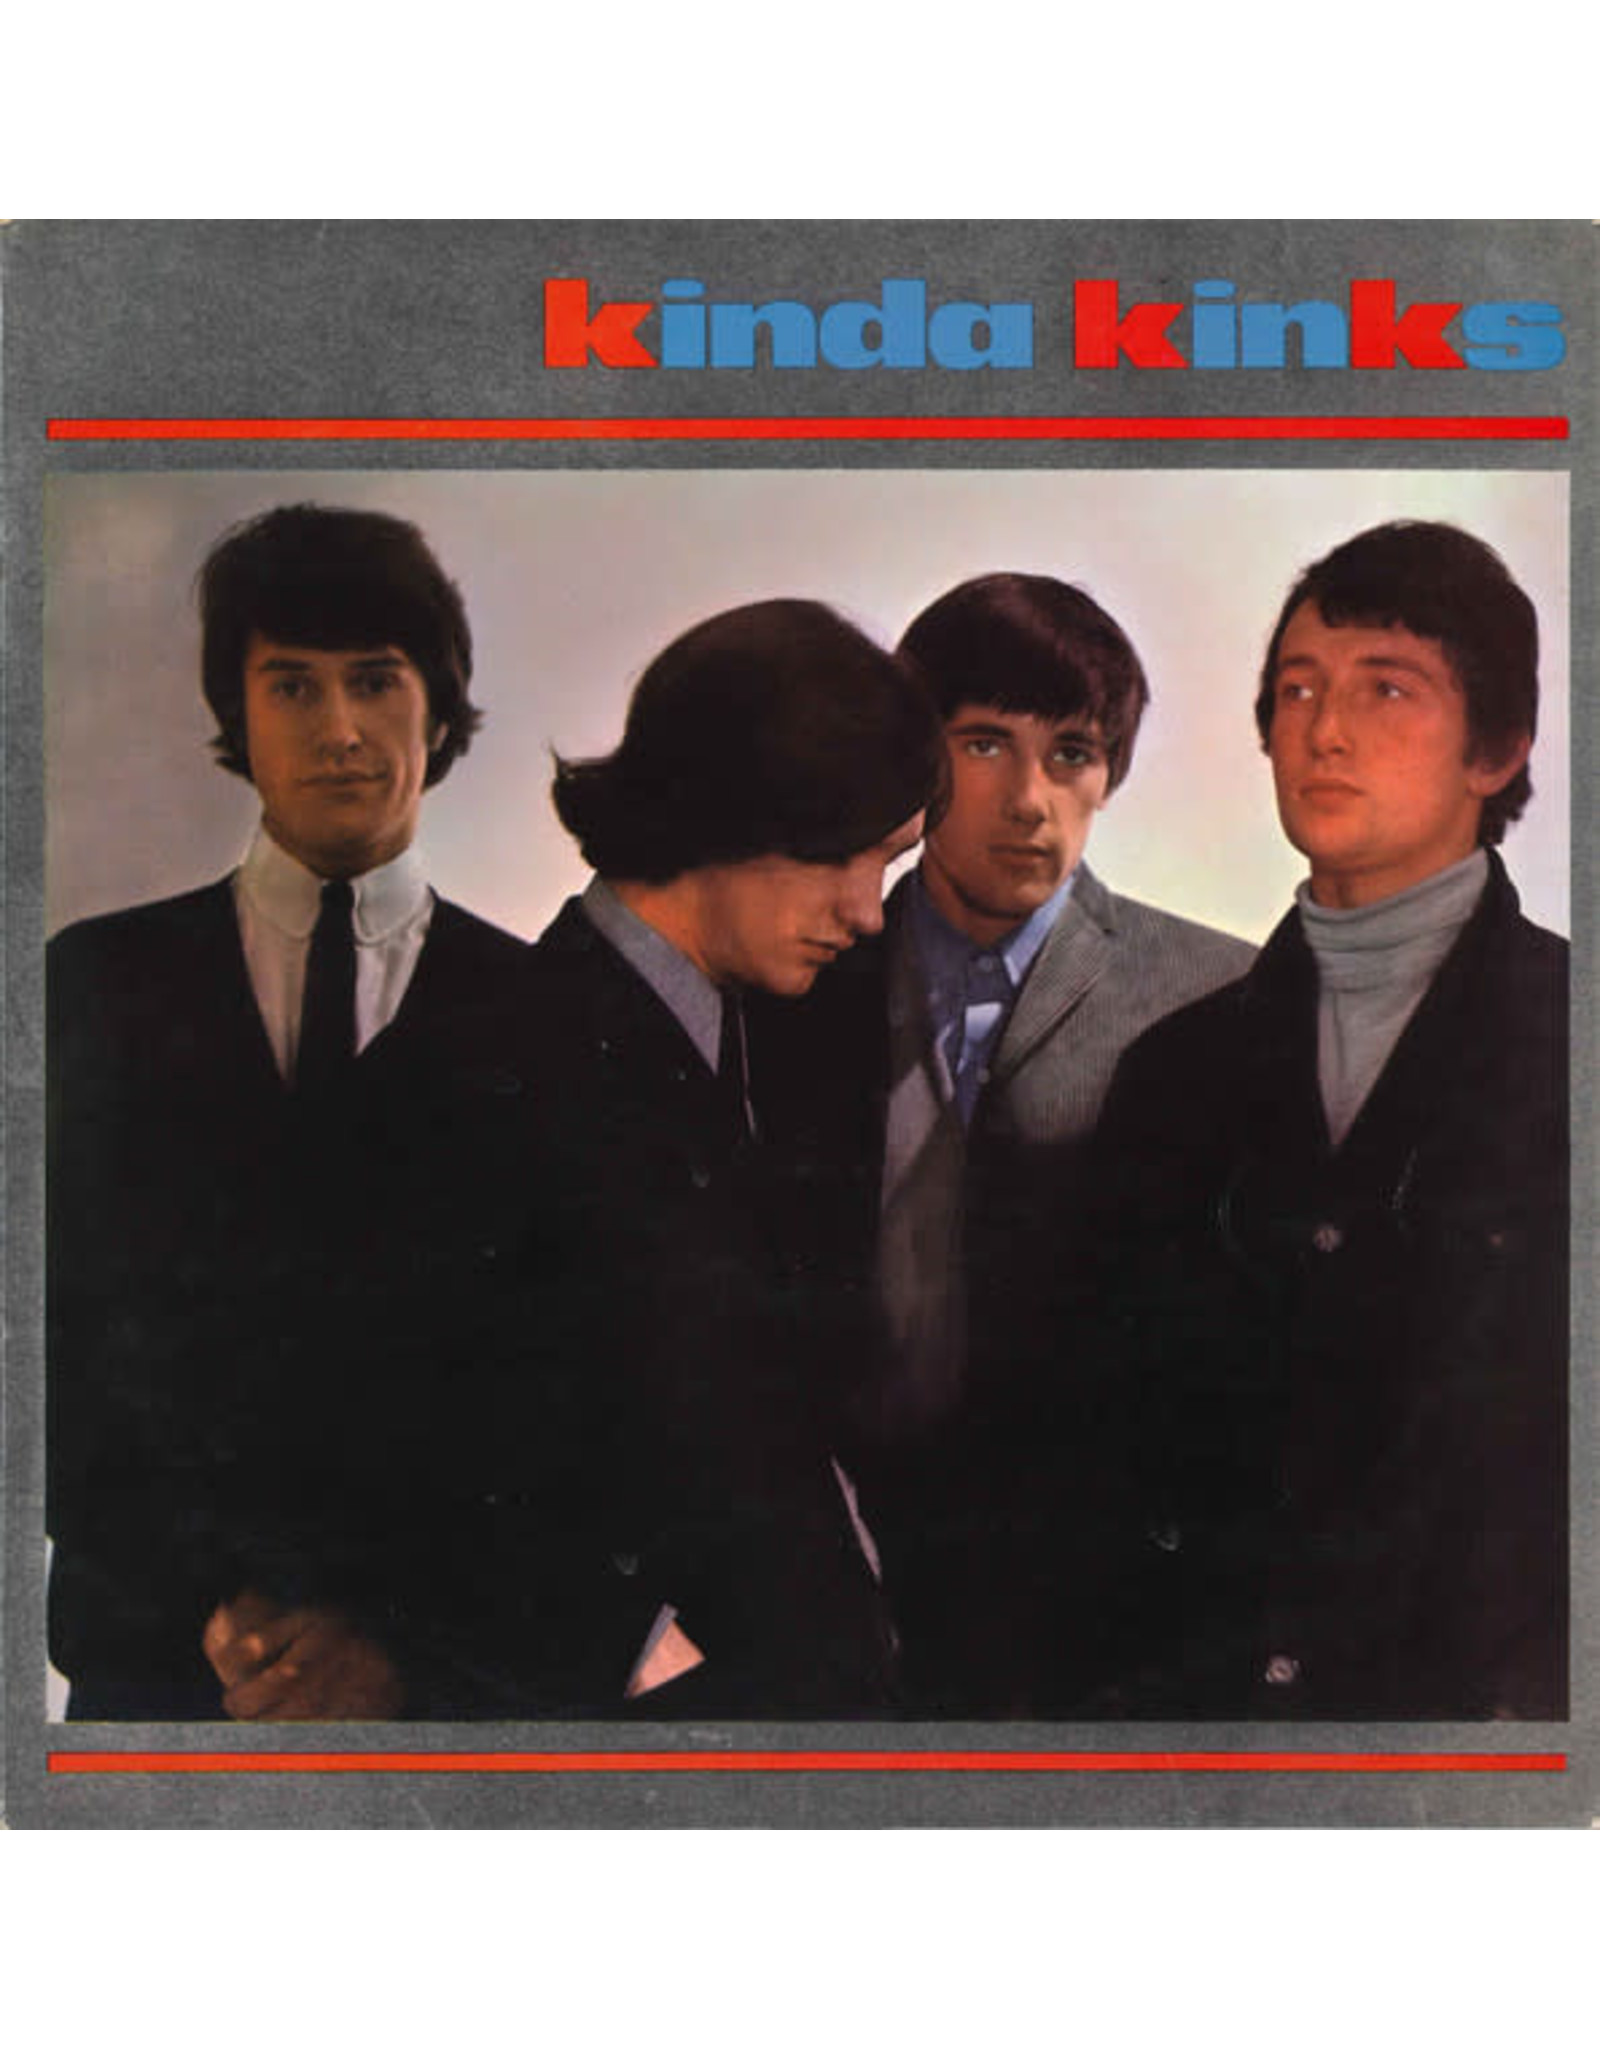 Kinks, The - Kinda Kinks LP